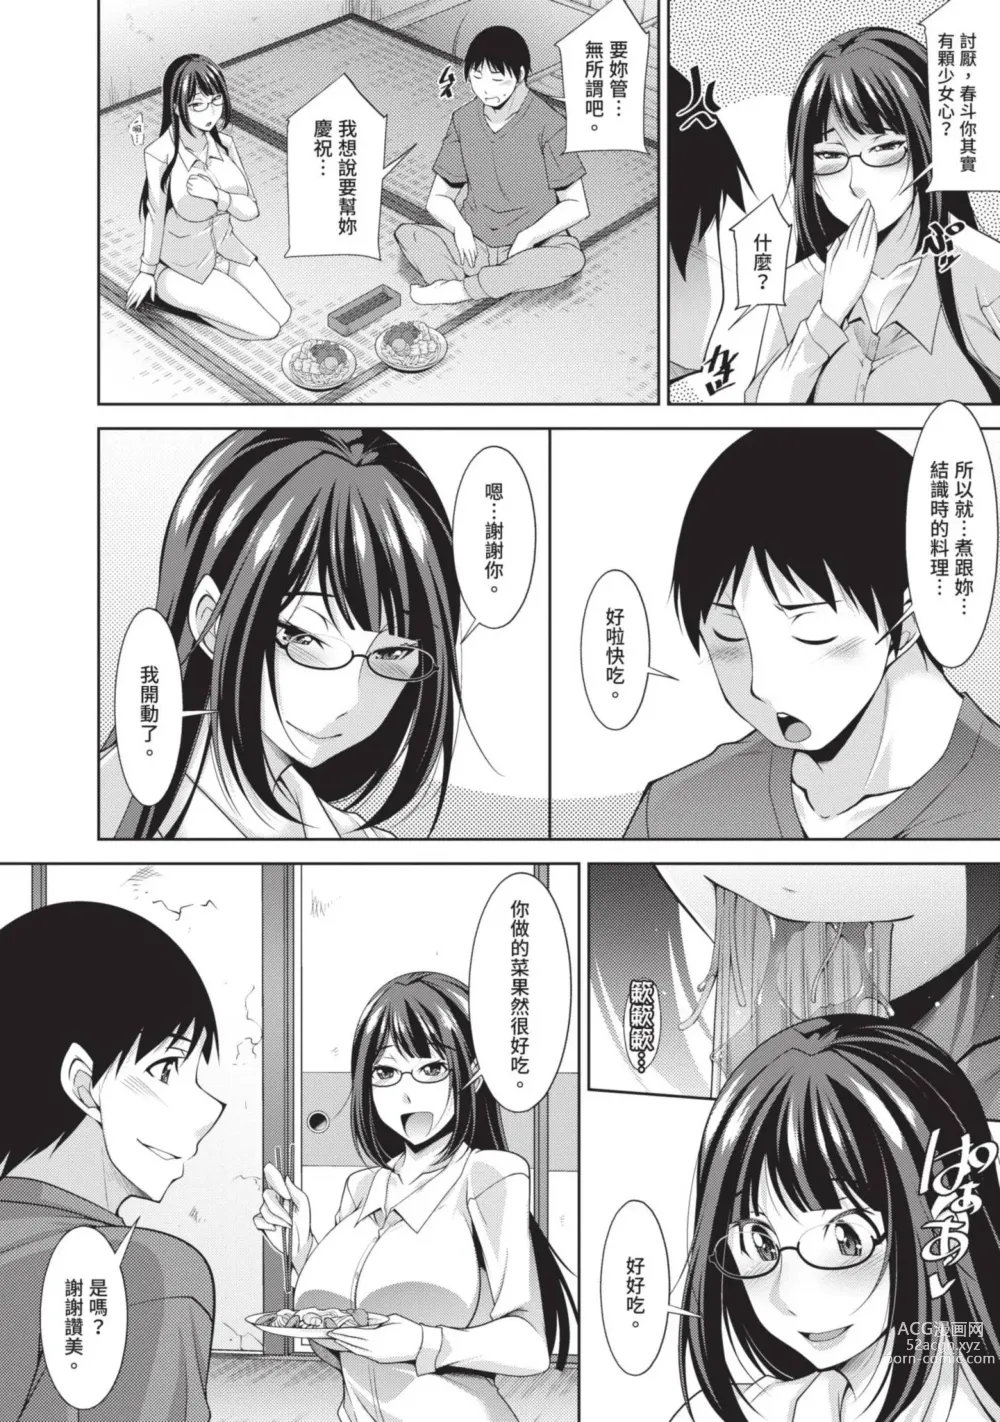 Page 150 of manga 眼鏡美女總是冷淡對應我